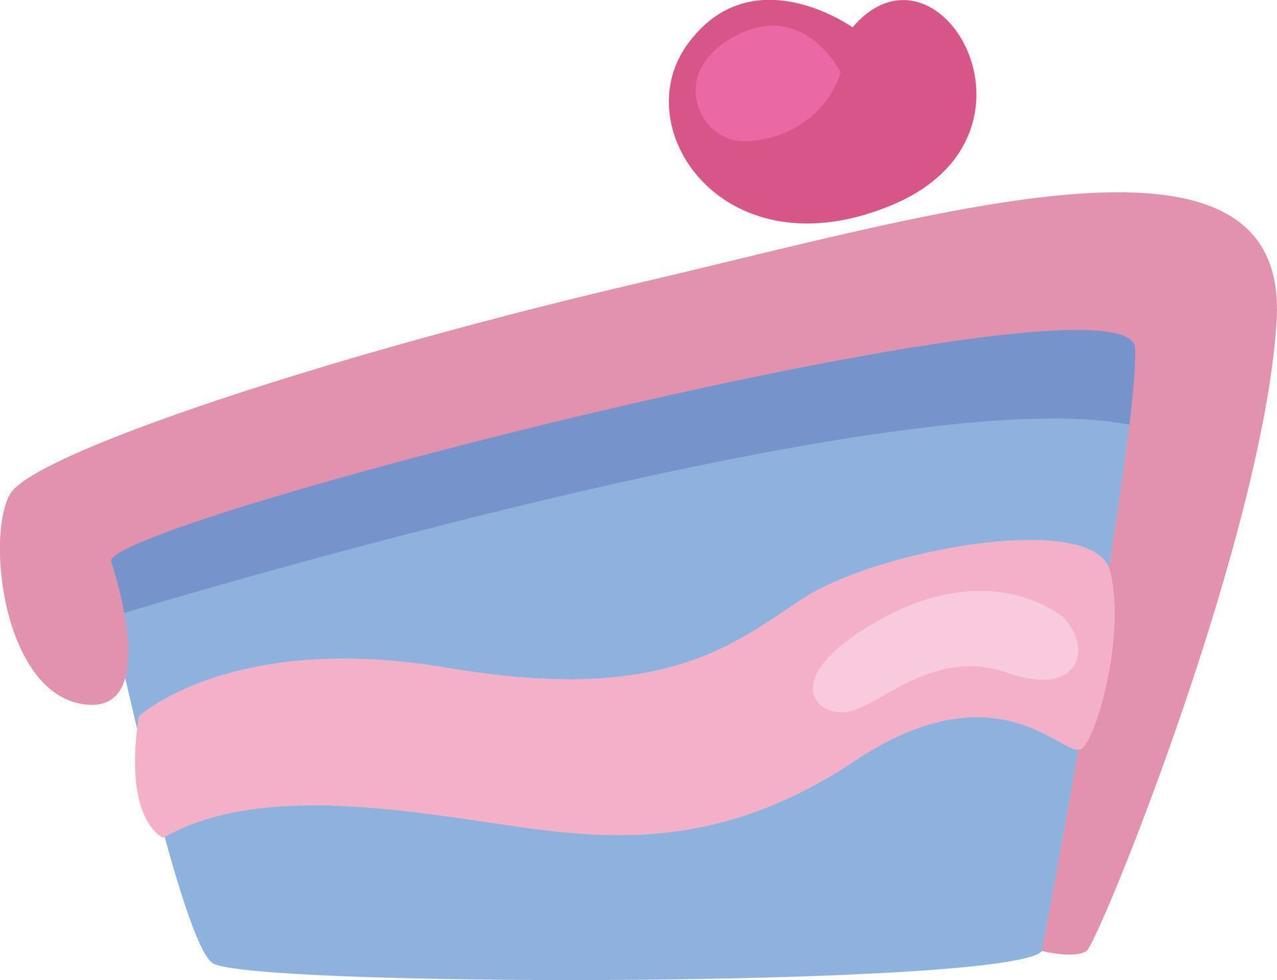 Pink cake slice, illustration, vector on a white background.